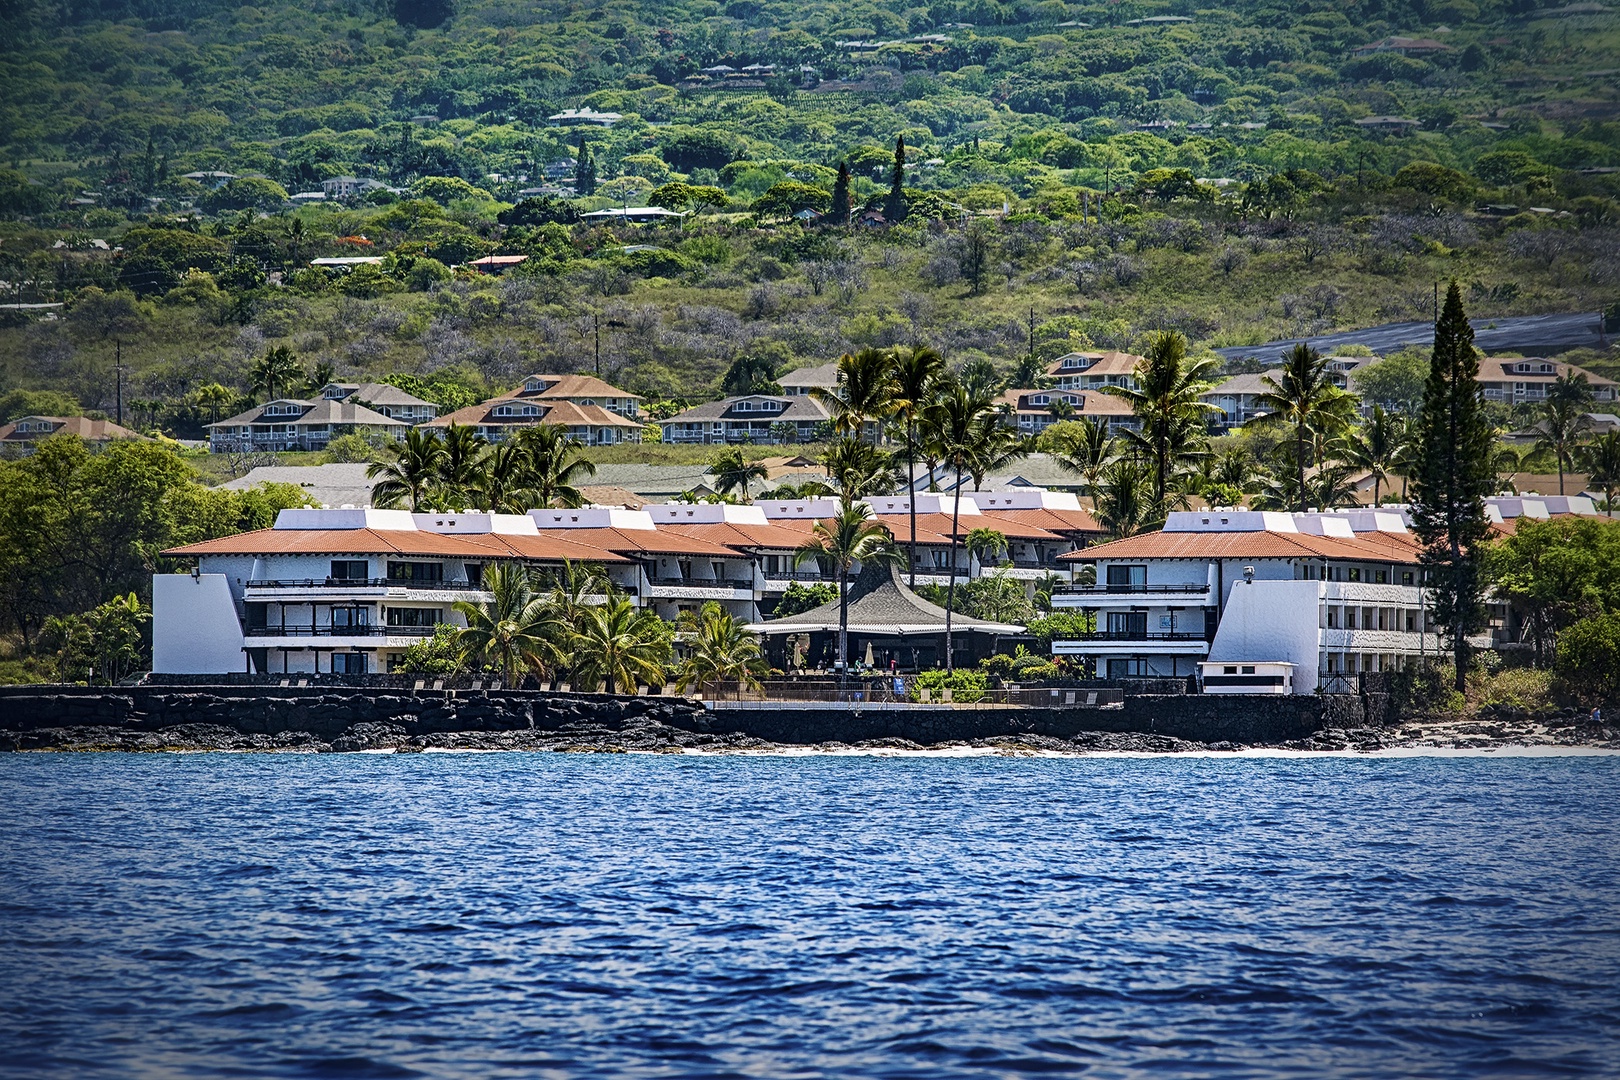 Kailua Kona Vacation Rentals, Casa De Emdeko 222 - Views of Casa De Emdeko from the water